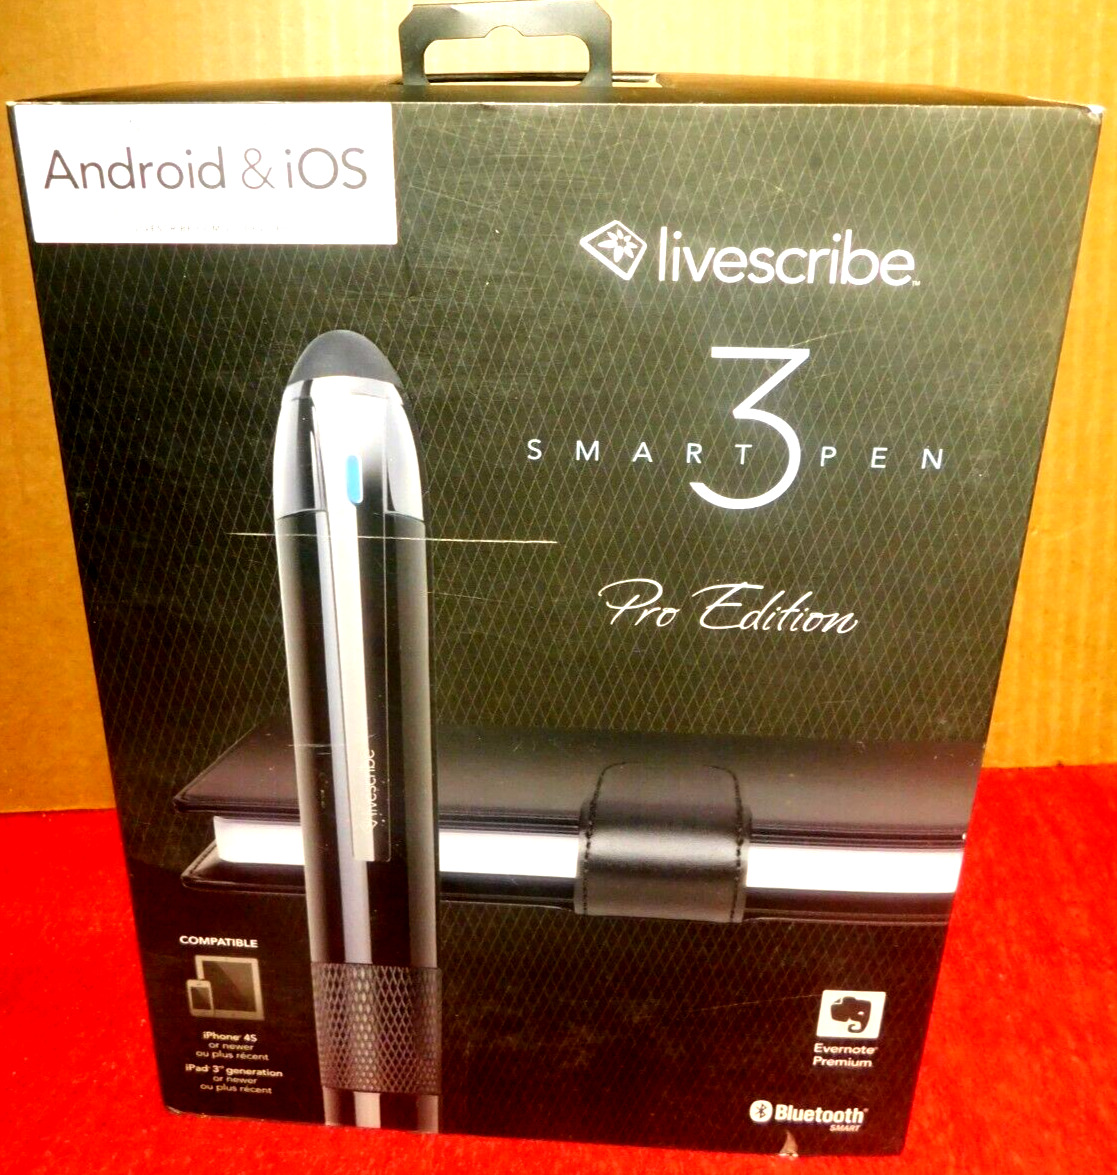 CPCA~Livescribe Smart Pen 3 Pro Edition Android & iOS Evernote Premium